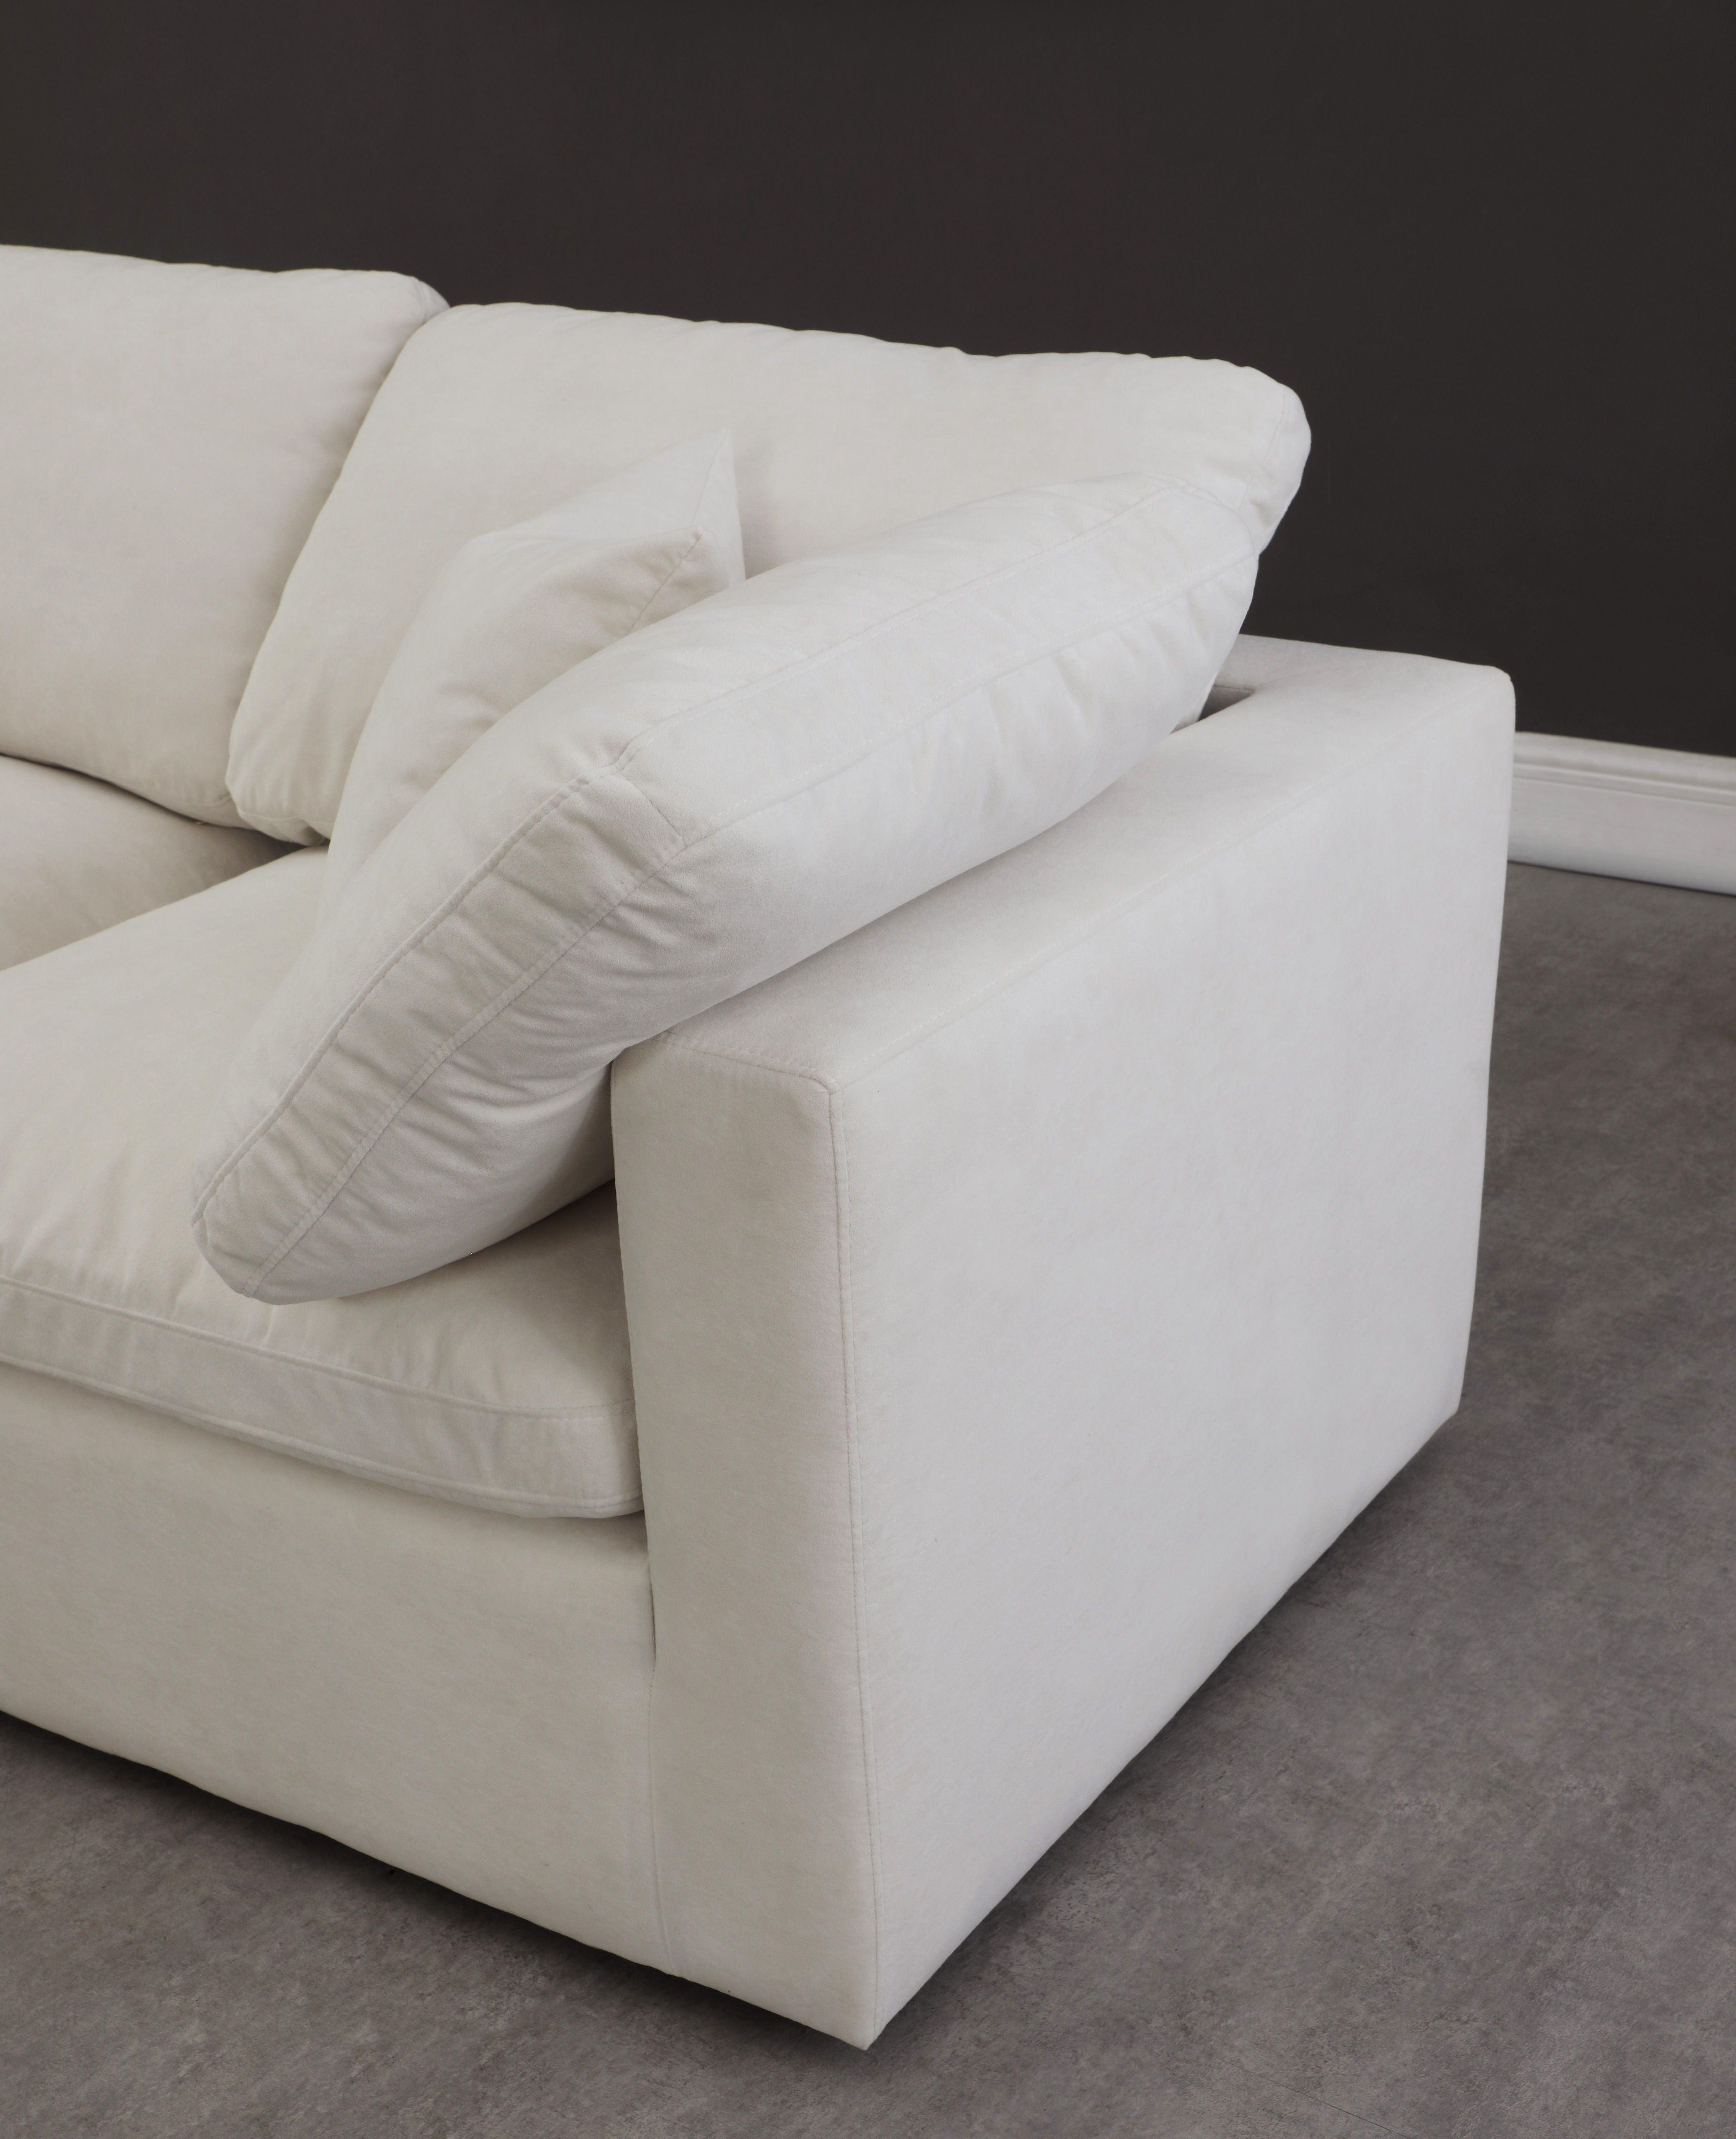 Meridian Furniture - Plush - Modular Armless 3 Seat Sofa - 5th Avenue Furniture